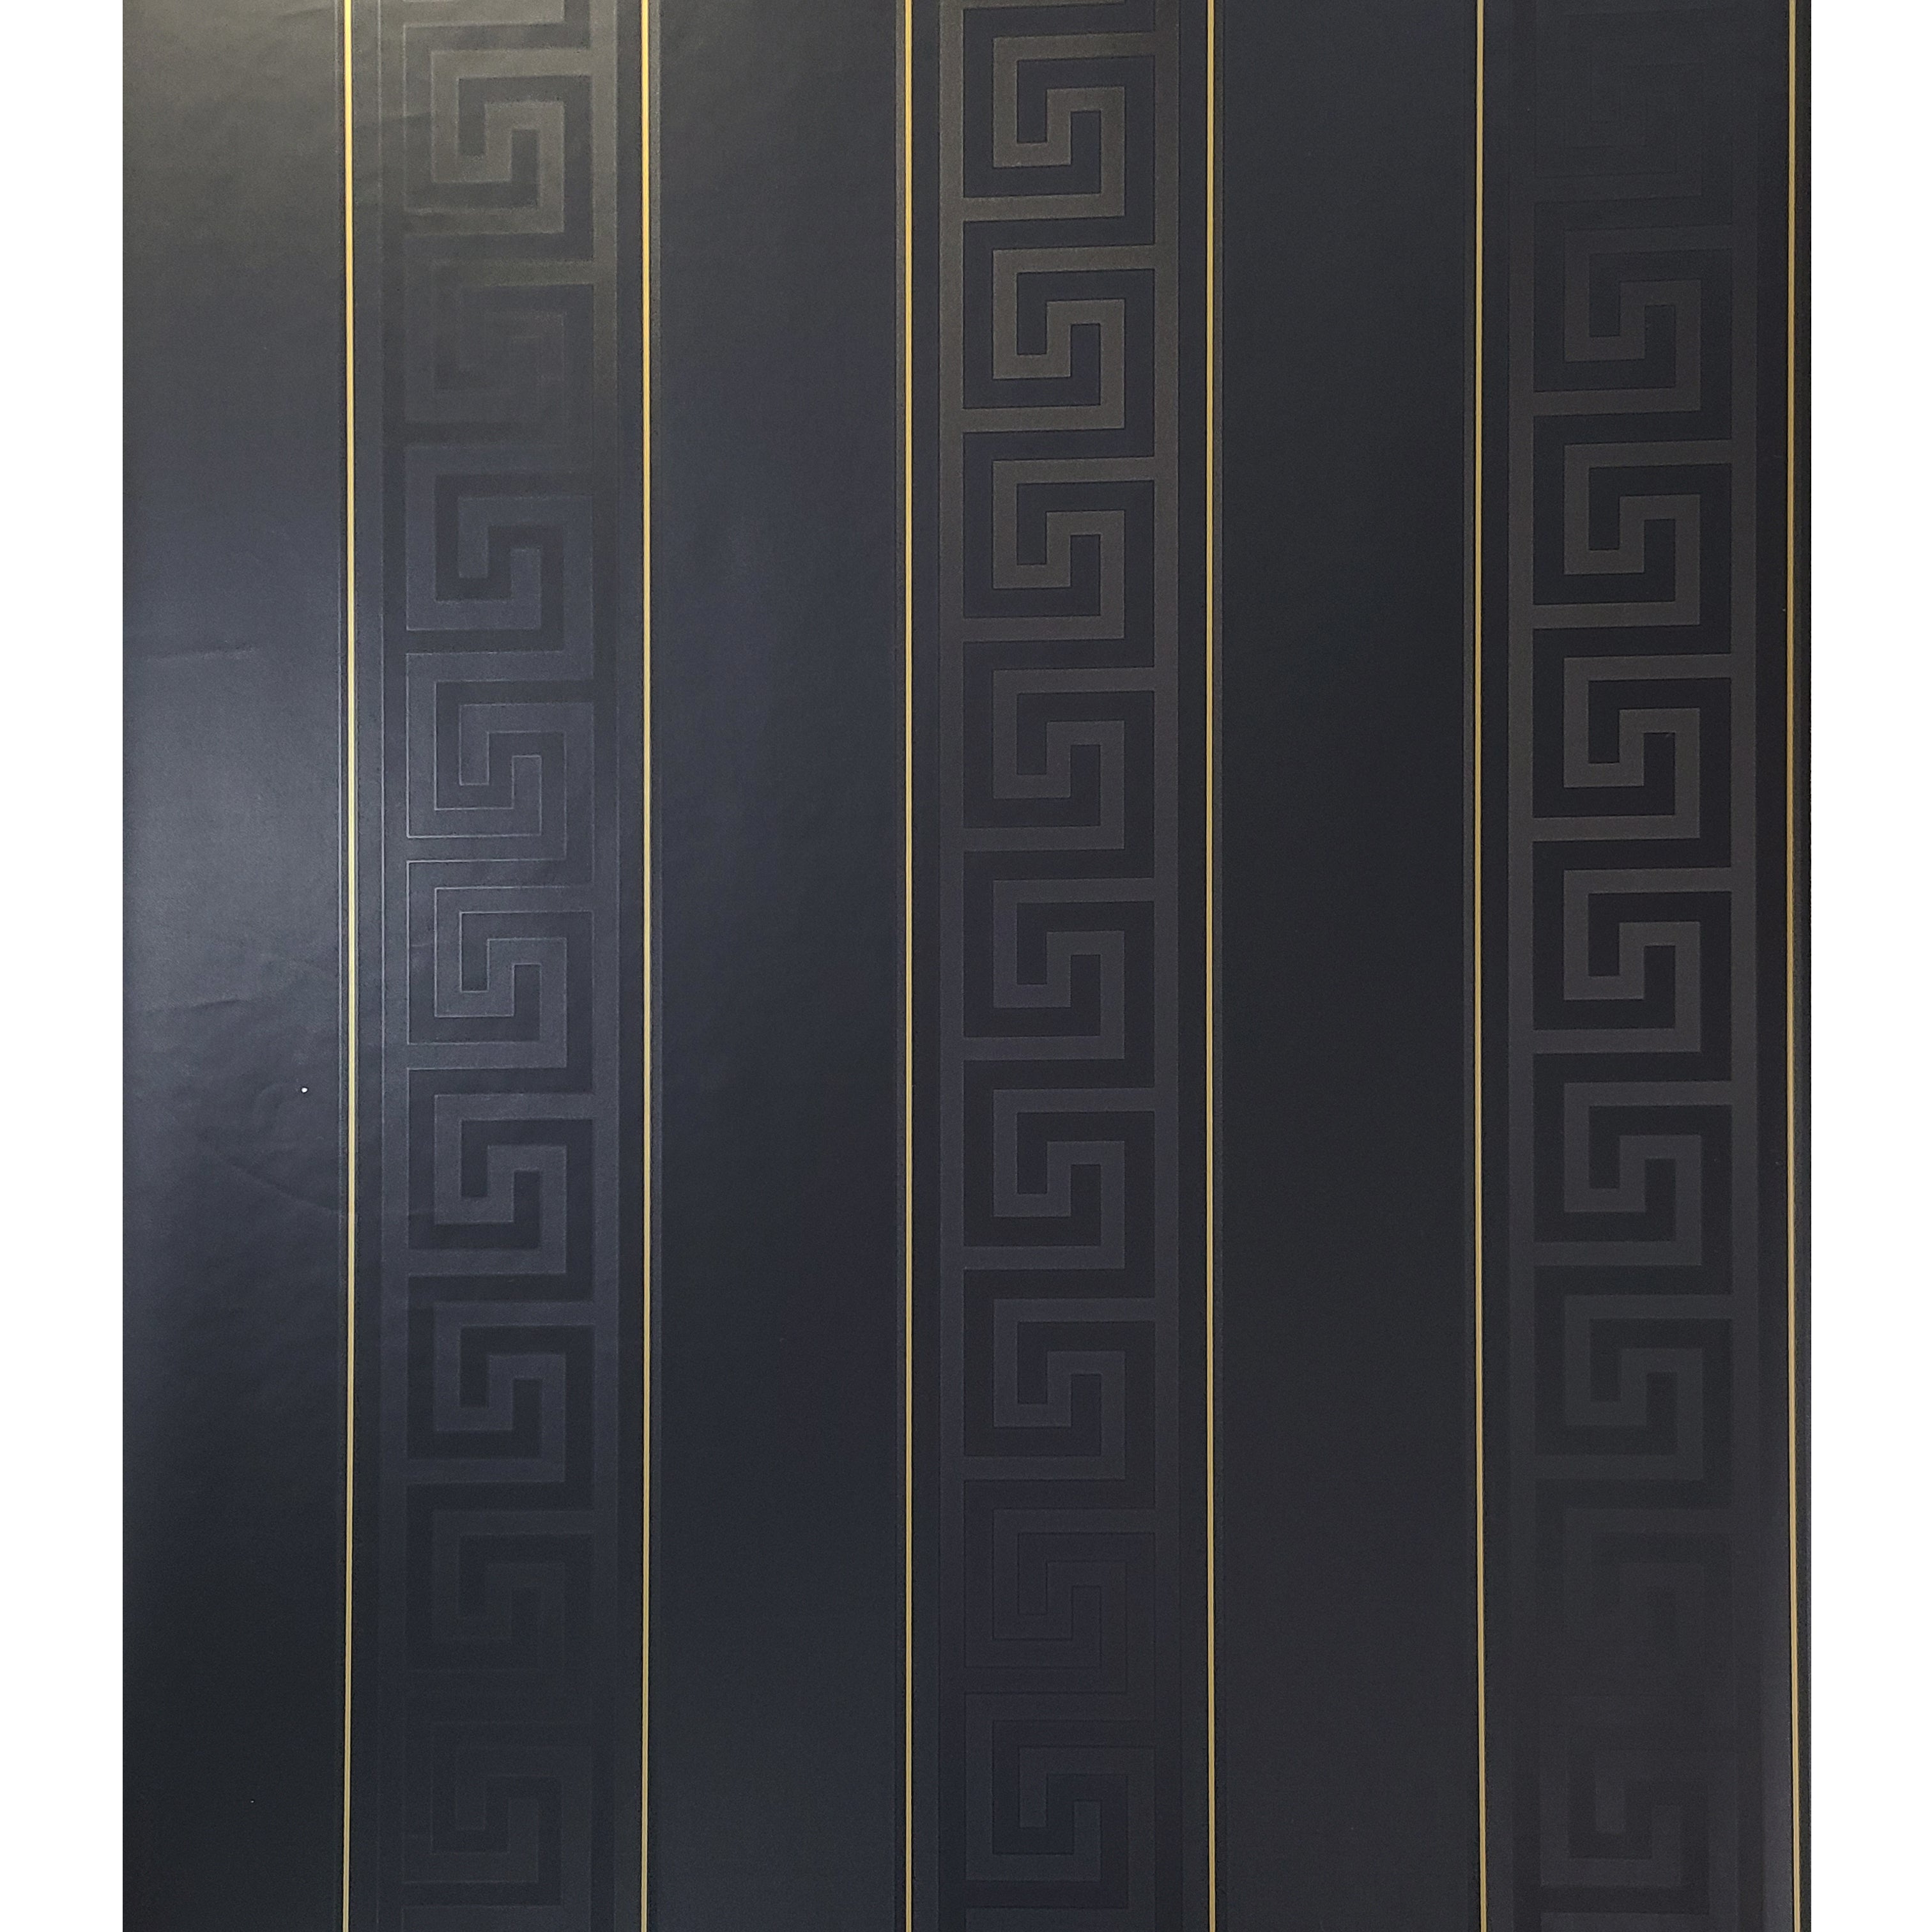 LV Gold Stripes wallpaper by Sneks99 - Download on ZEDGE™